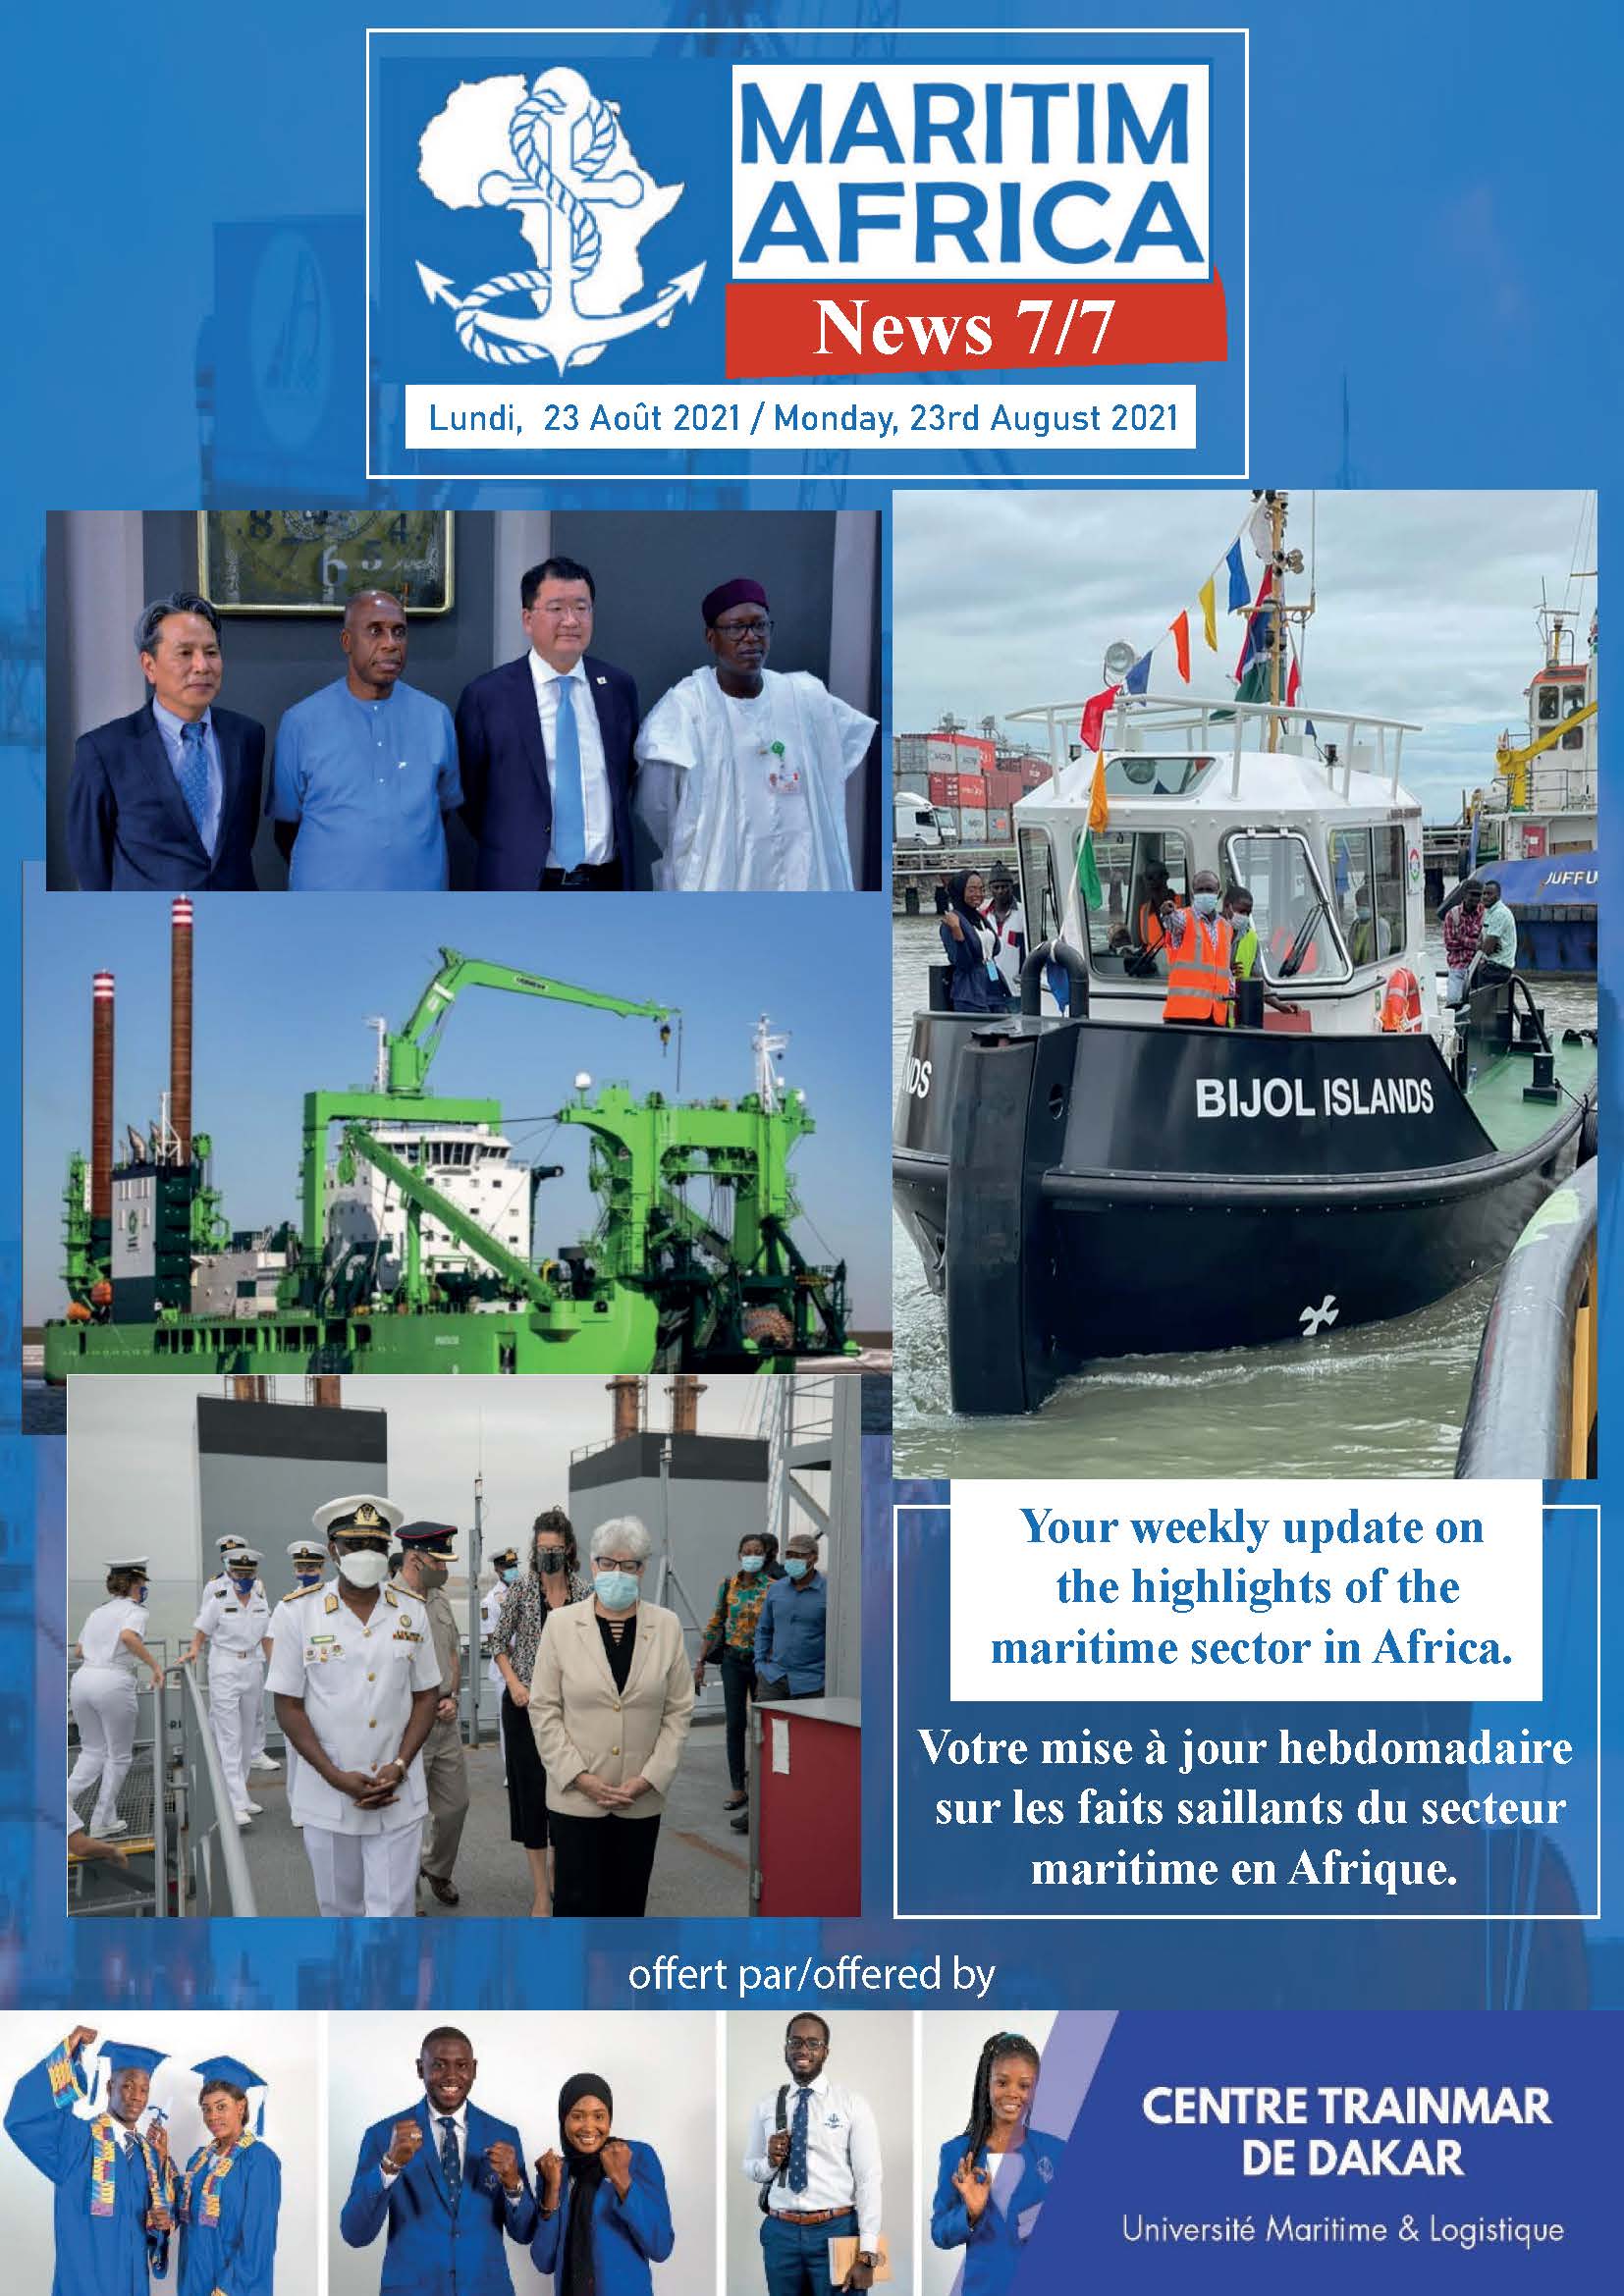 Maritimafrica News 7/7 (Semaine du 16 au 22 août 2021)